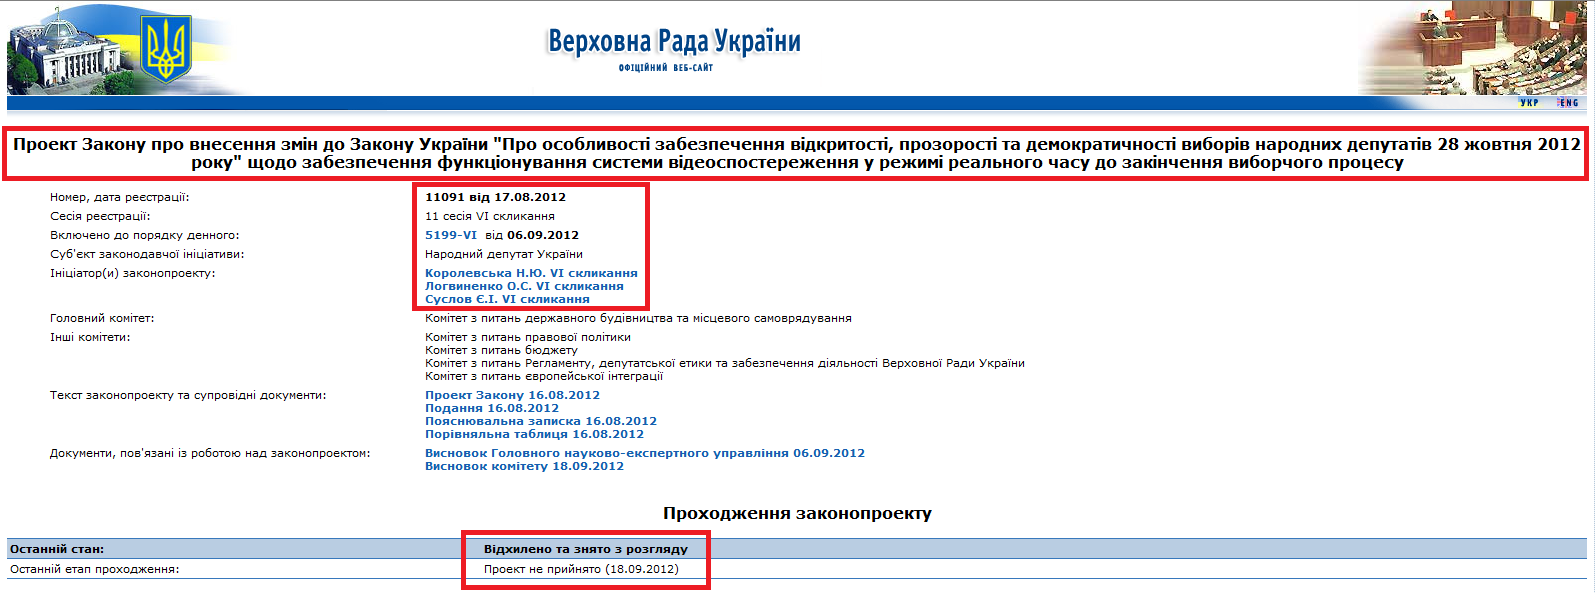 http://w1.c1.rada.gov.ua/pls/zweb_n/webproc4_1?pf3511=44164